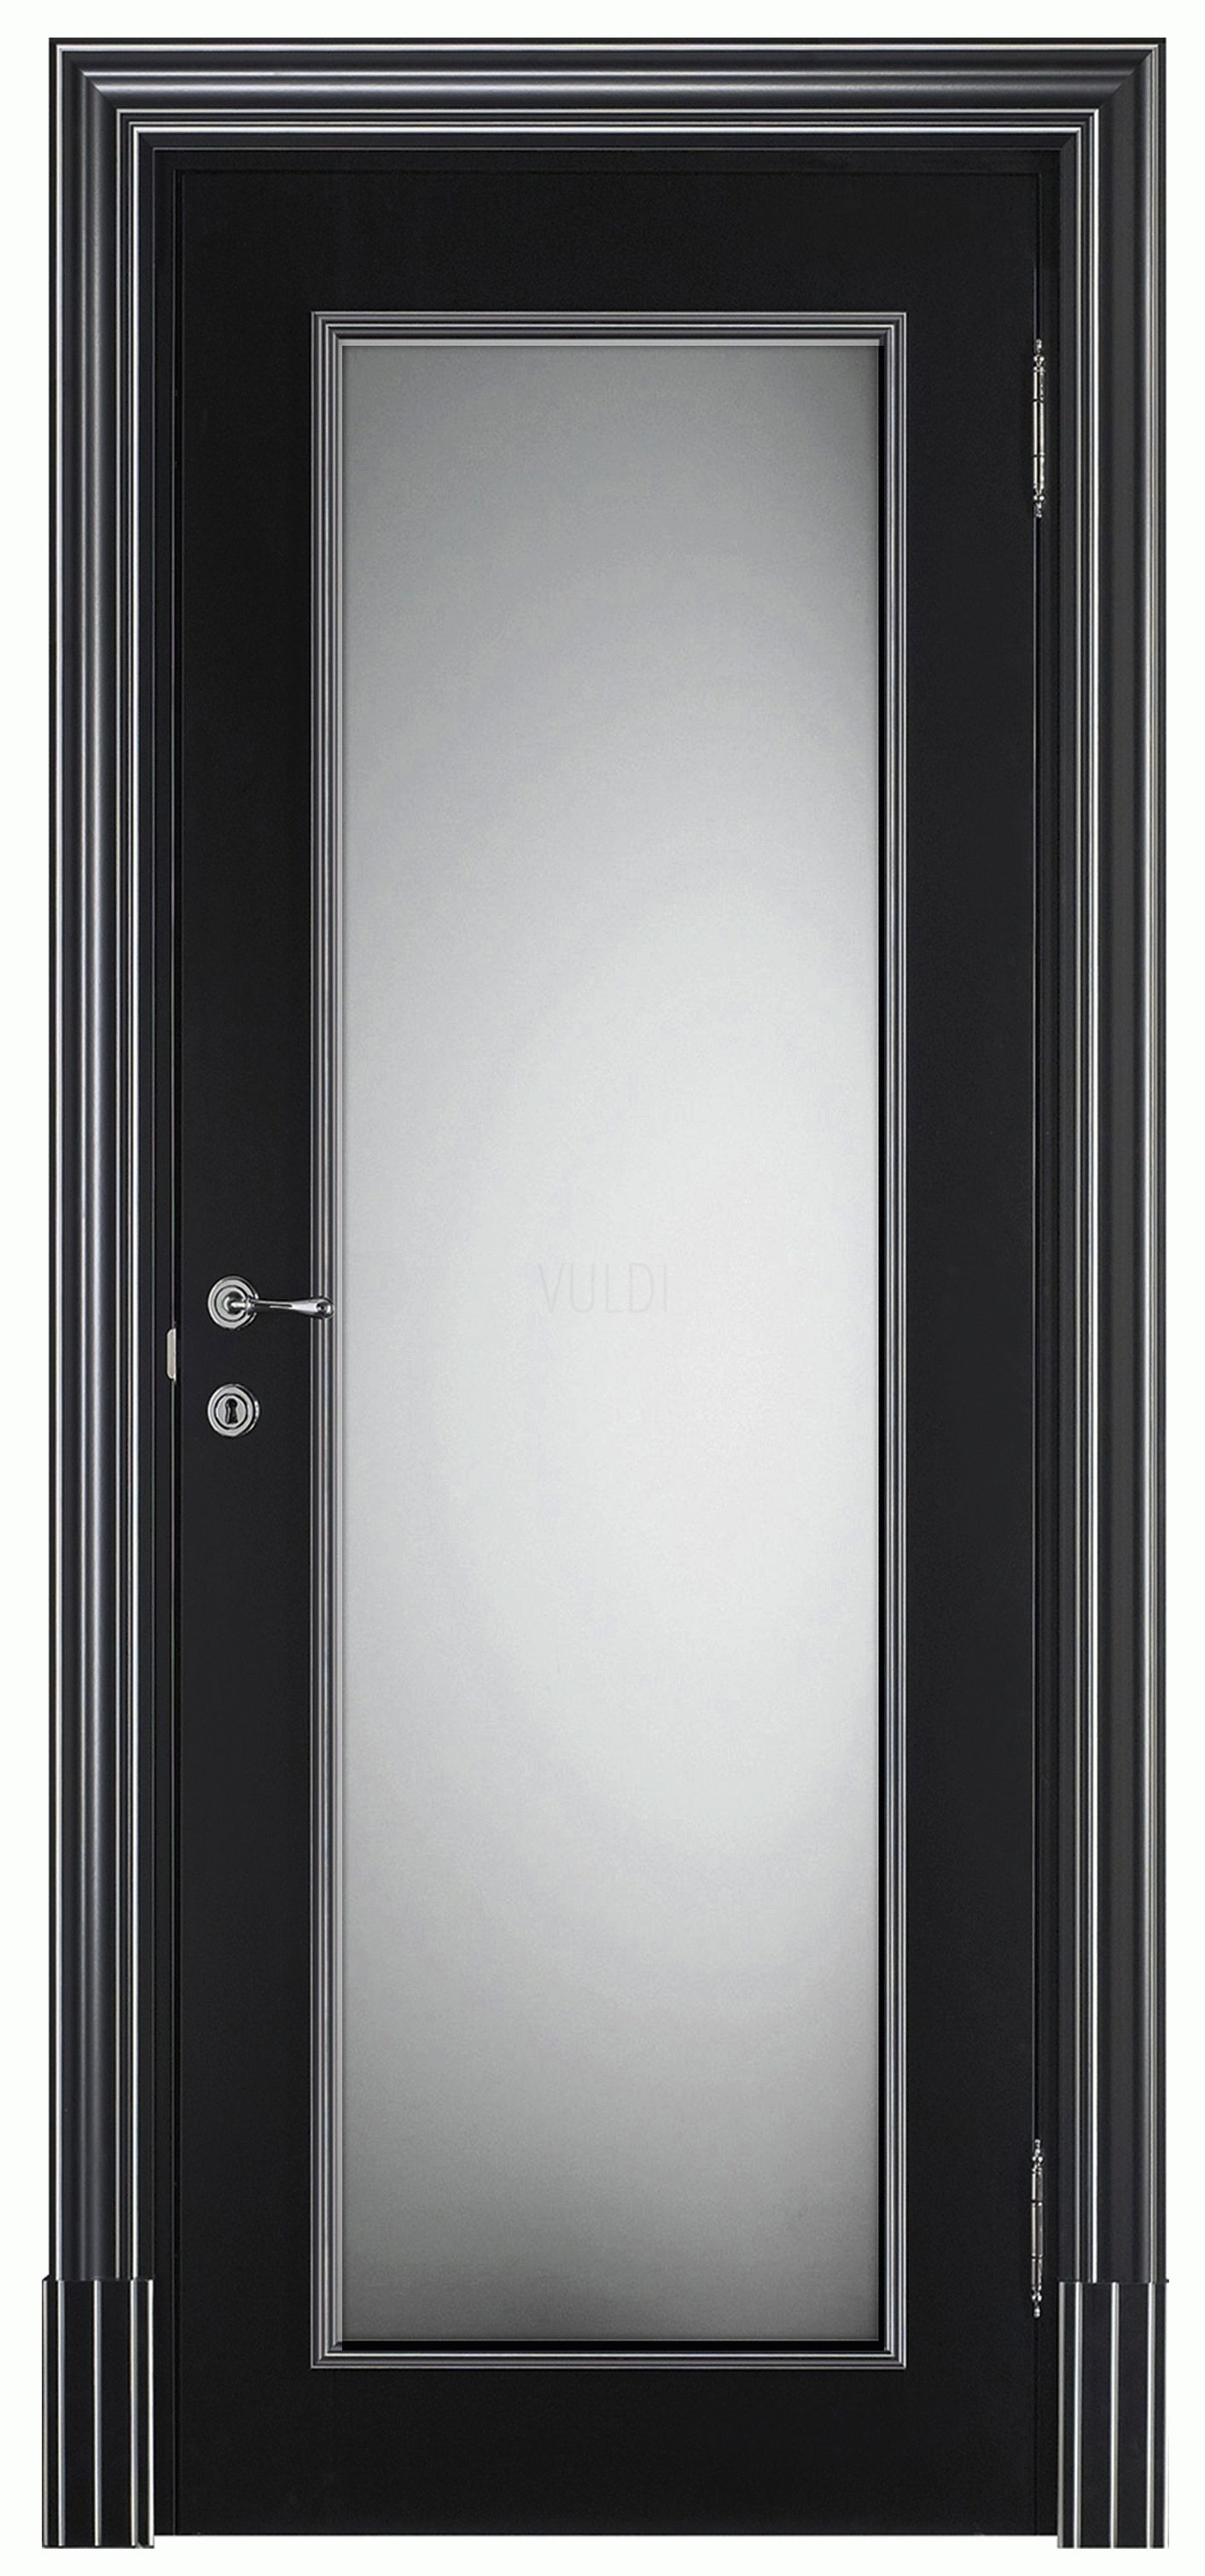  Potenza classico 130 PB Interior Door image from VULDI COMPANY